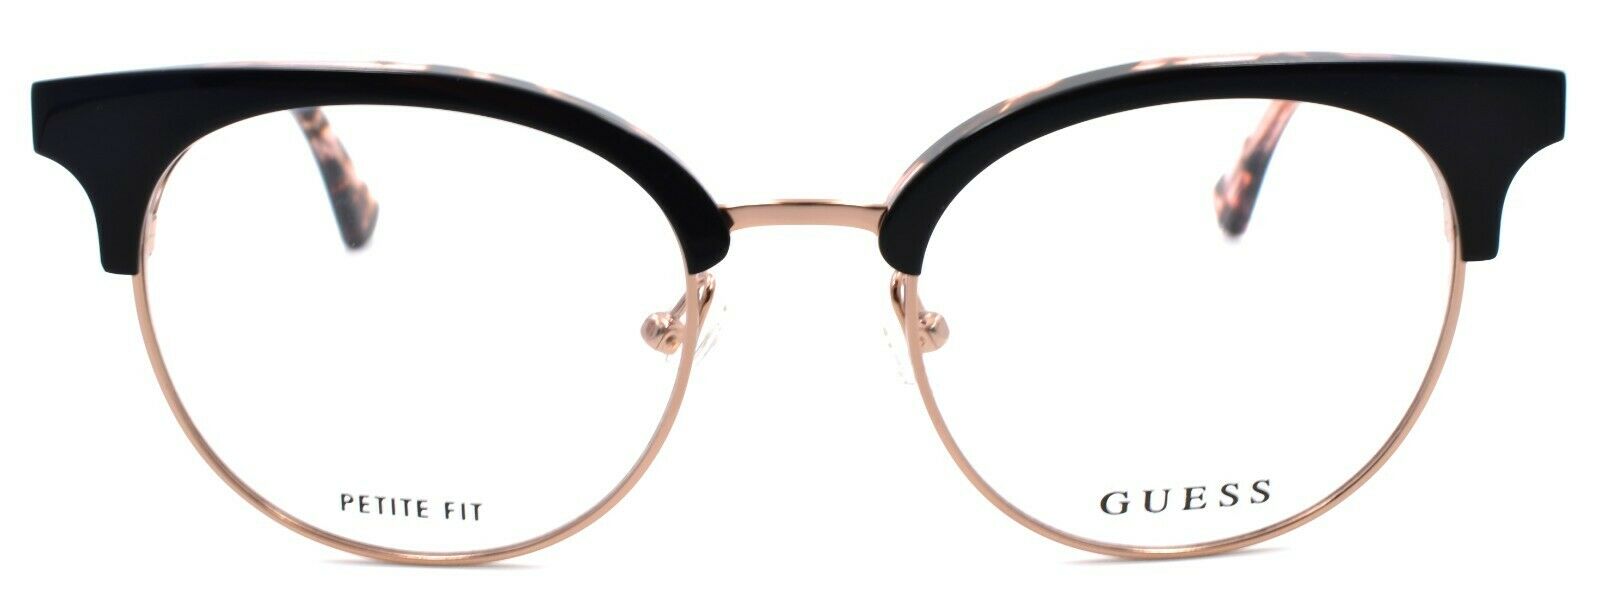 2-GUESS GU2744 005 Women's Eyeglasses Frames Petite 49-19-140 Black / Rose Gold-889214111180-IKSpecs